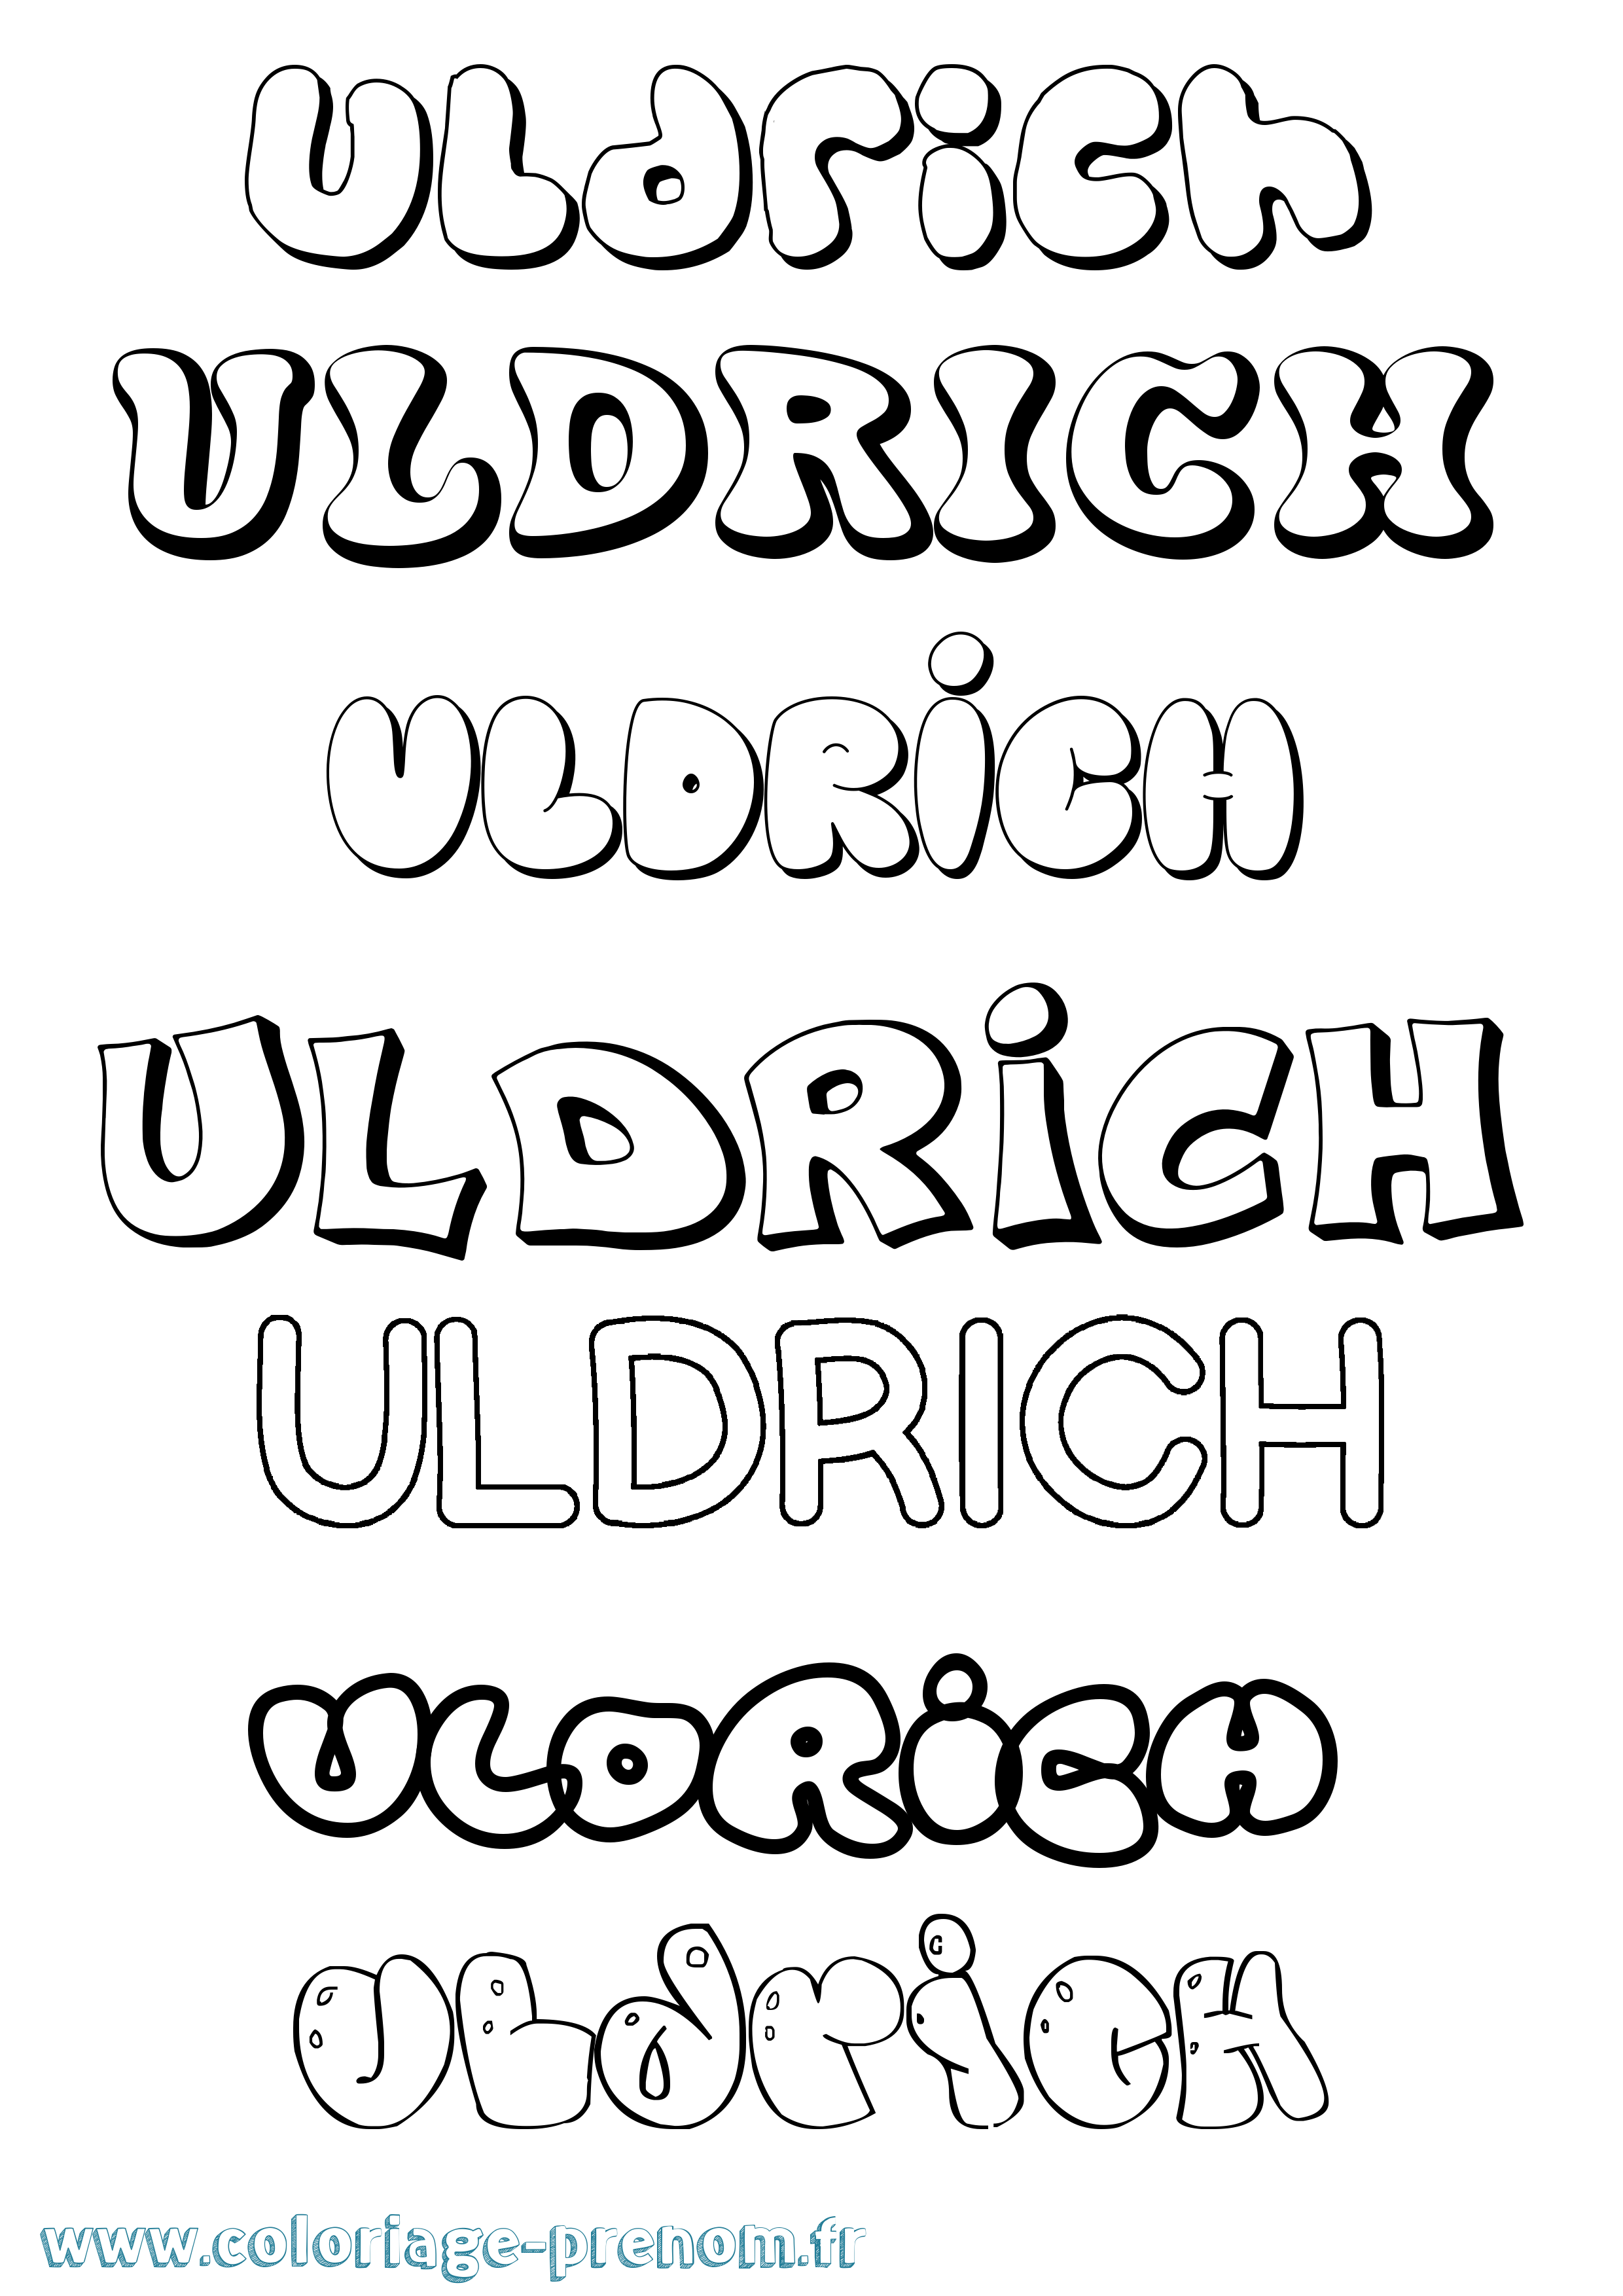 Coloriage prénom Uldrich Bubble